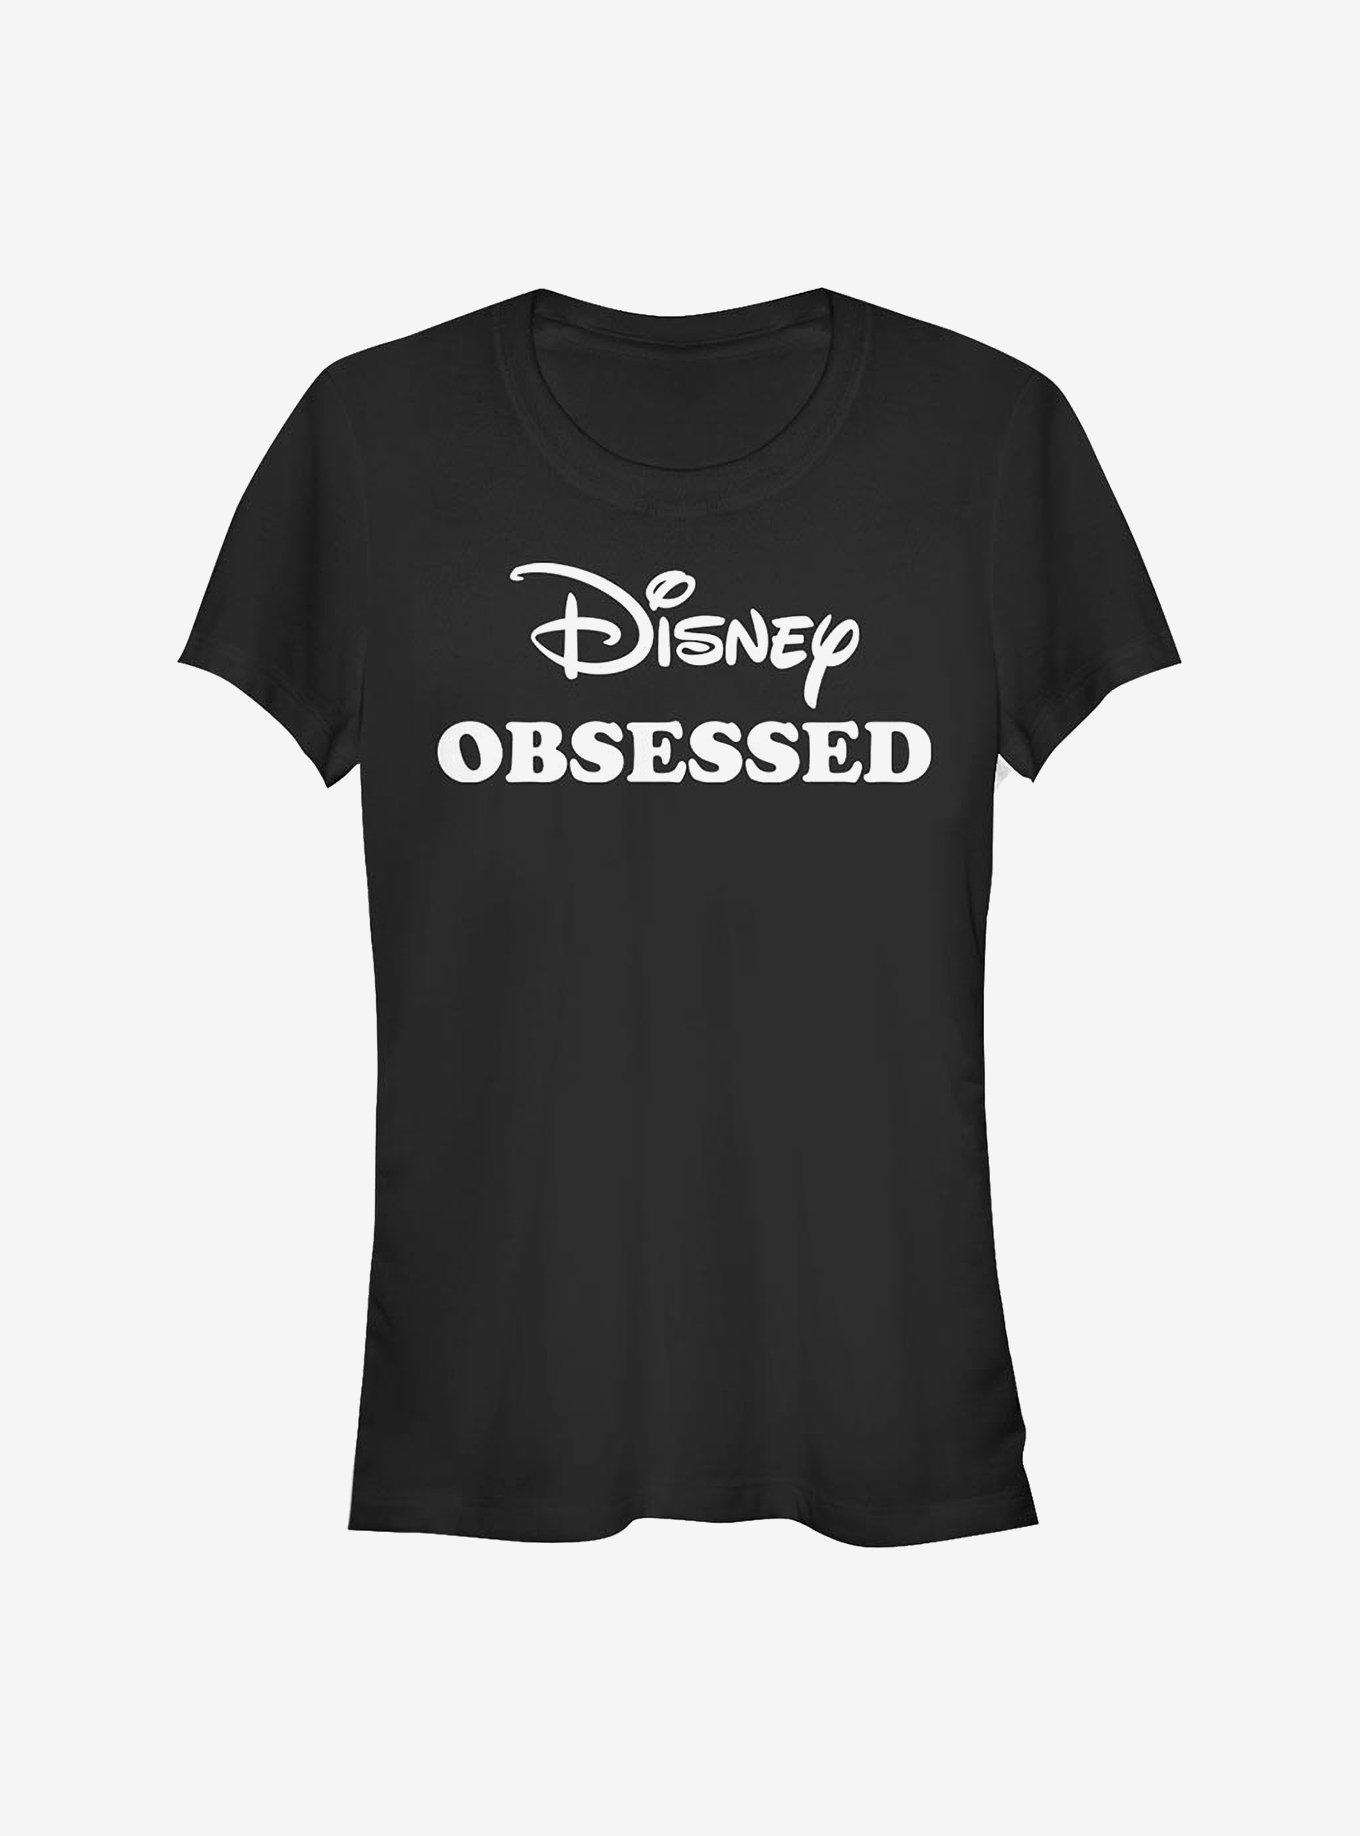 Disney Channel Obsessed Girls T-Shirt